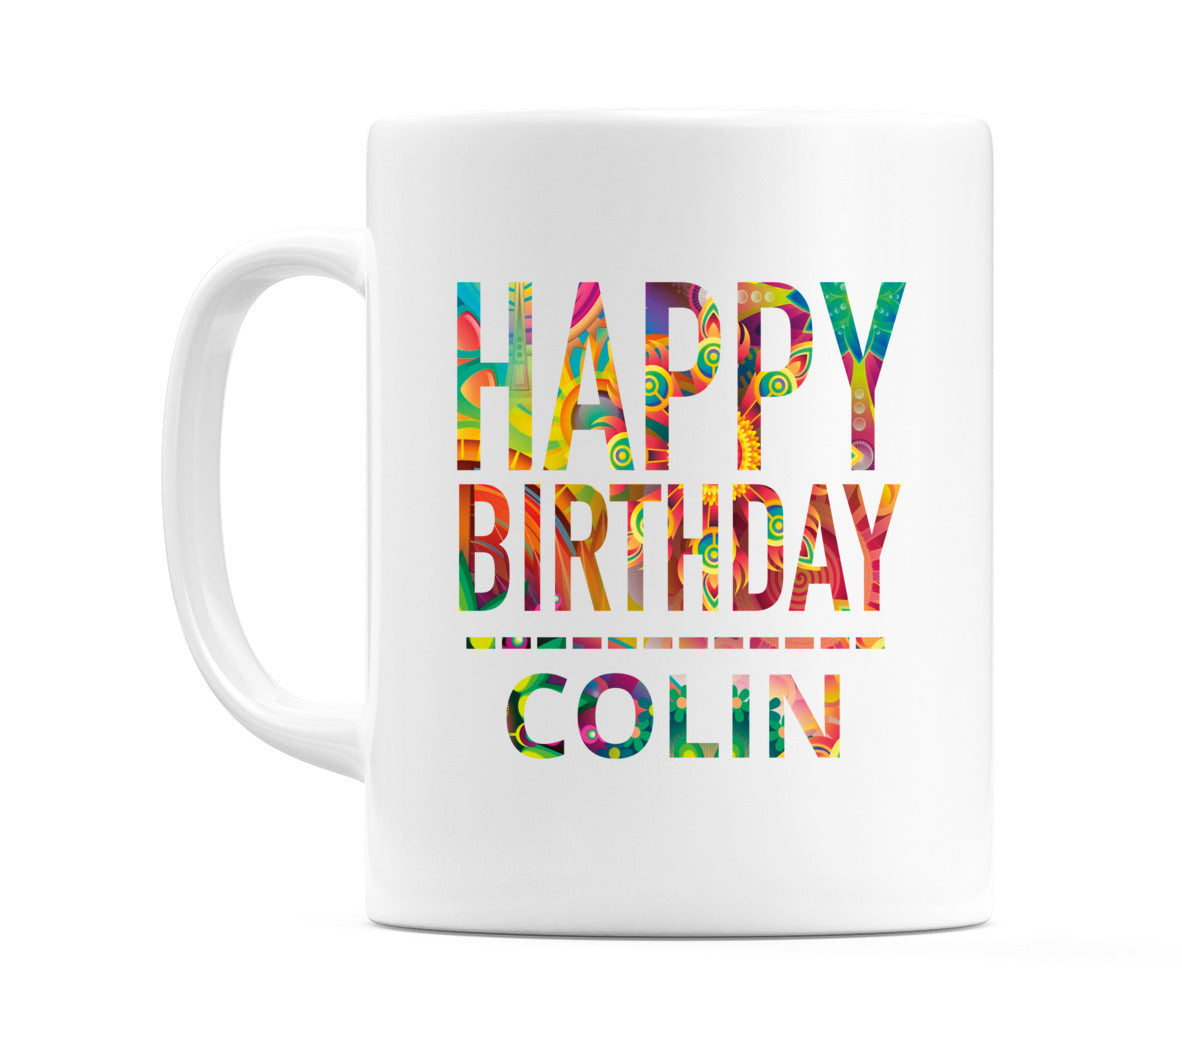 Happy Birthday Colin (Tie Dye Effect) Mug Cup by WeDoMugs